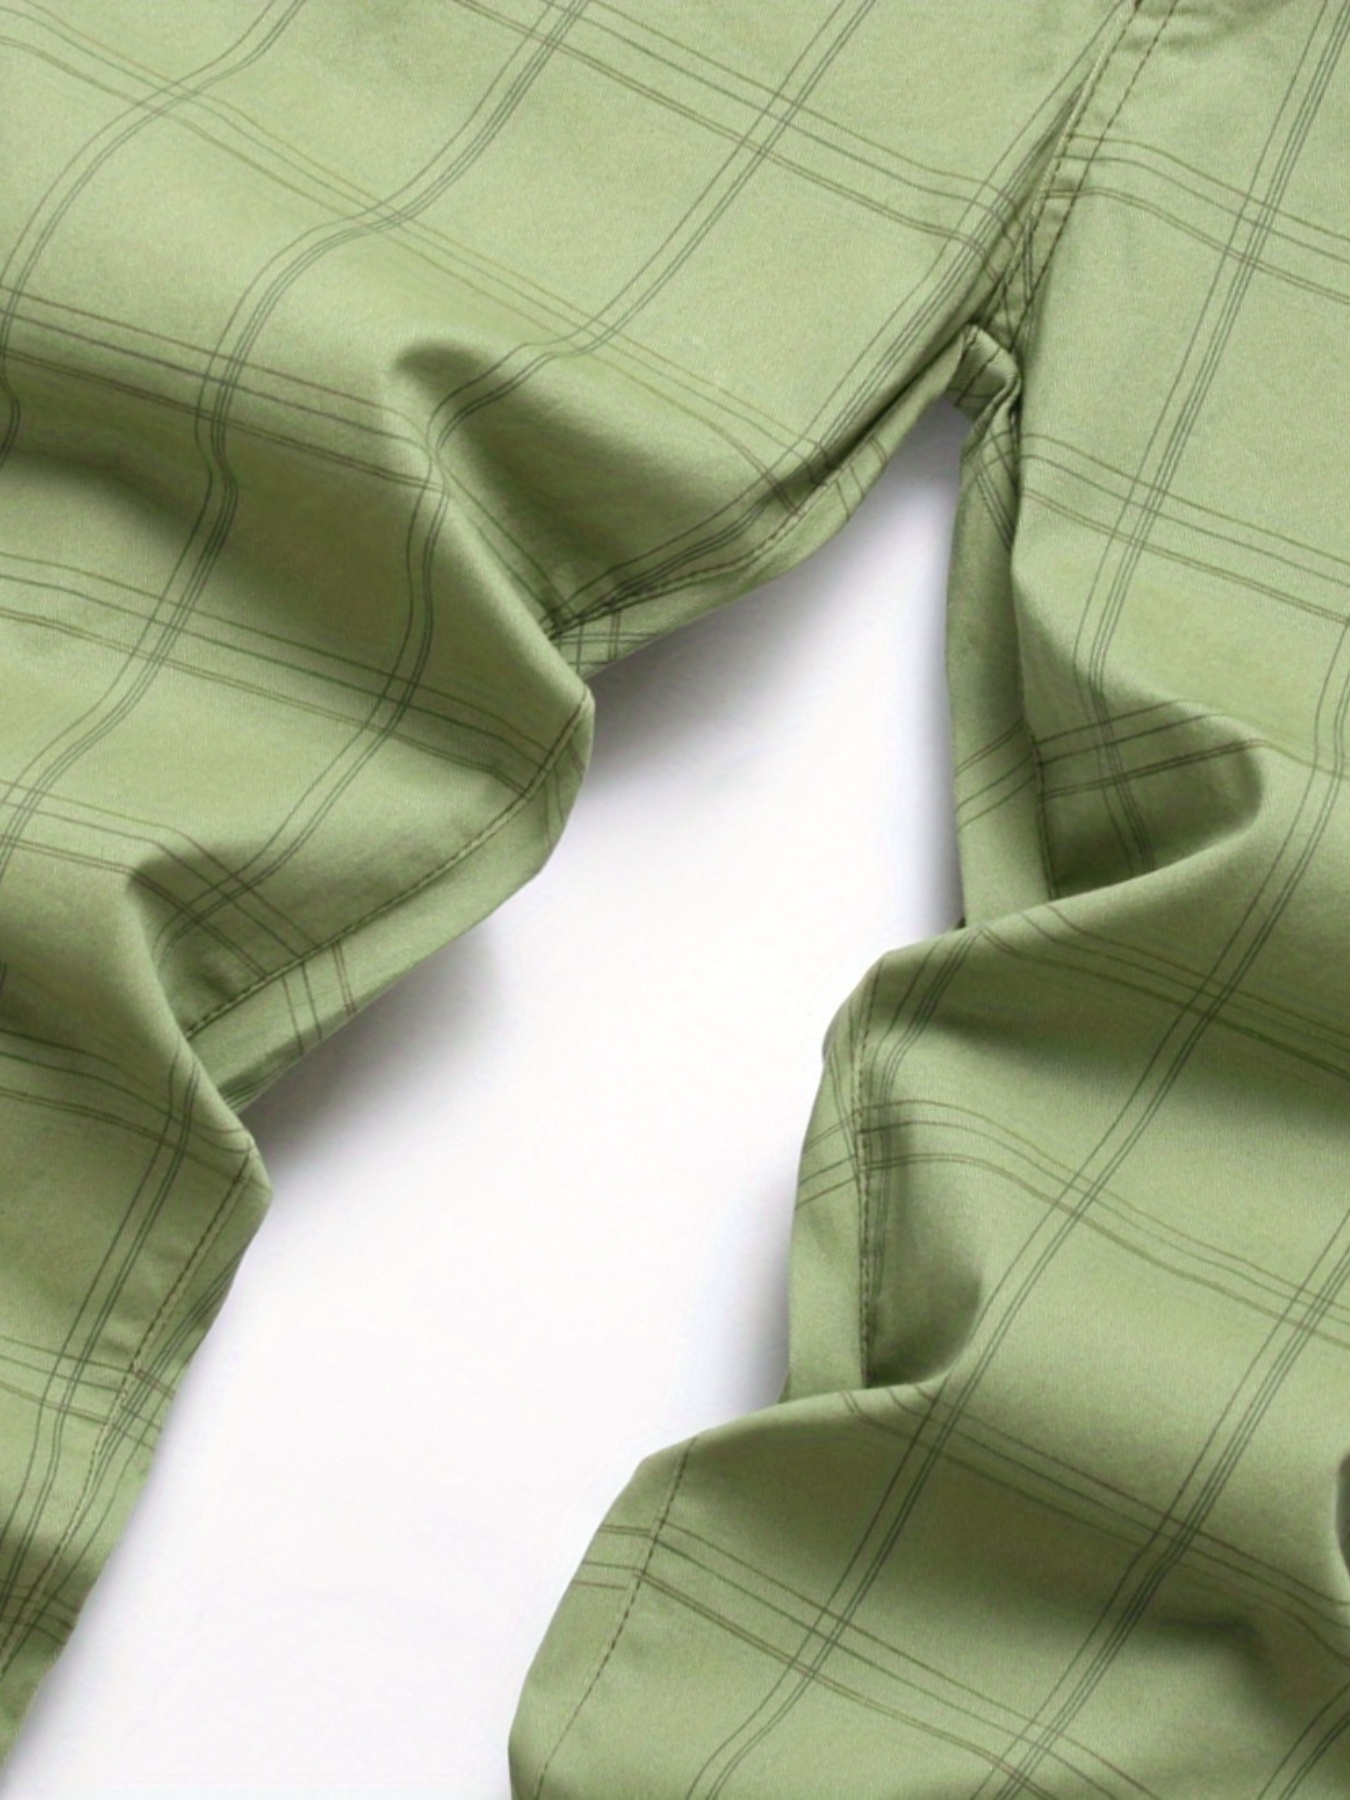 Men's Fashion Plaid Pants olive Green 